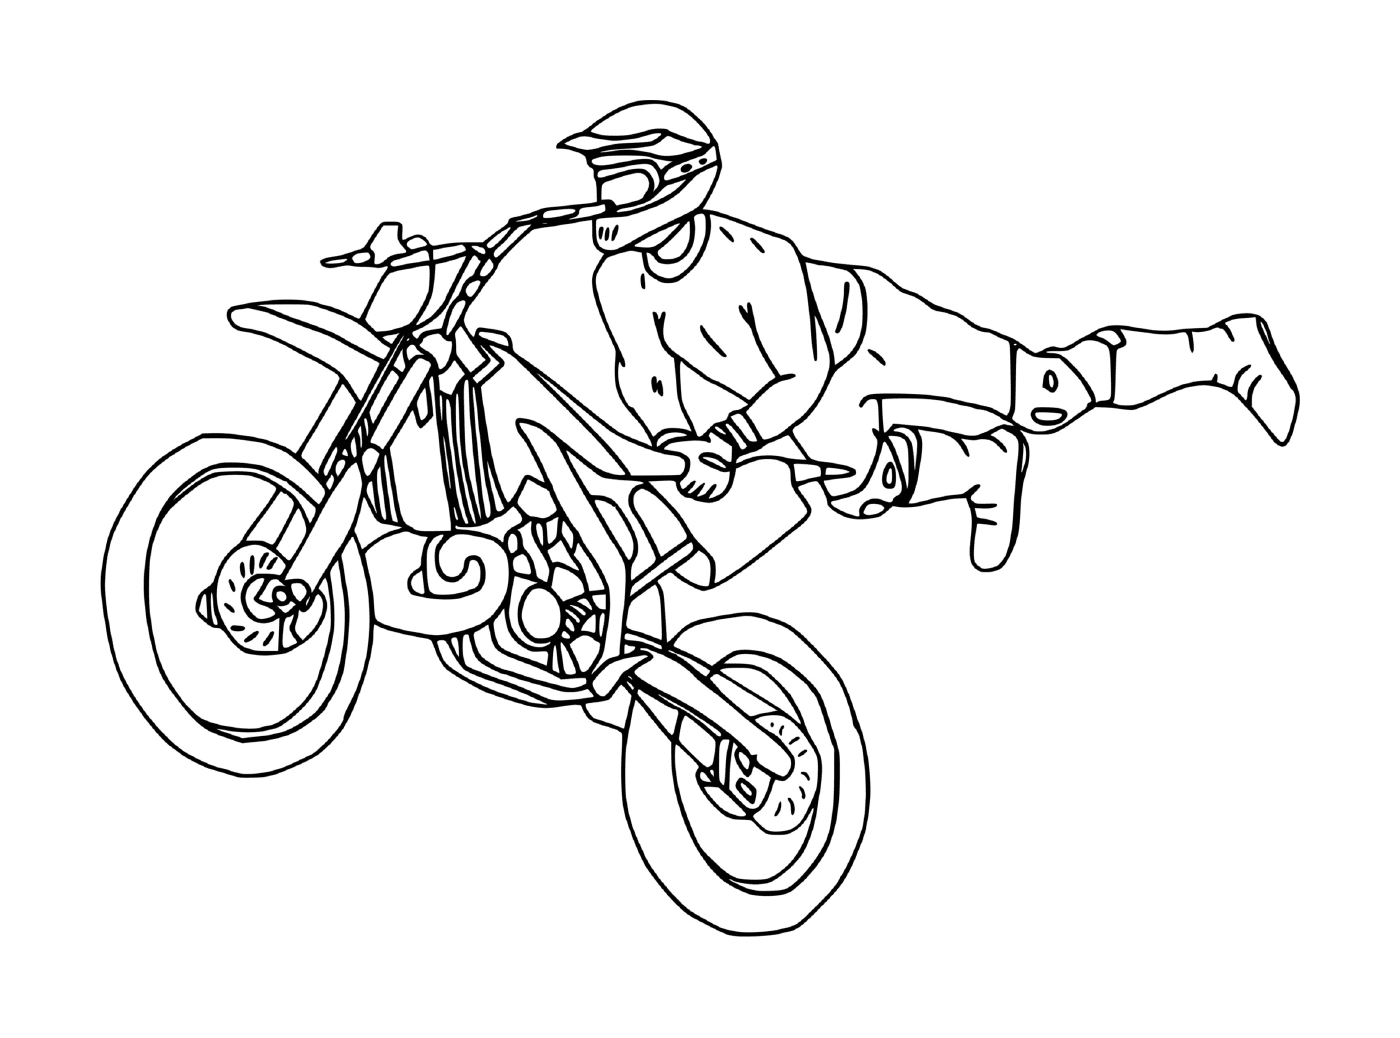  man on motorcycle cross 